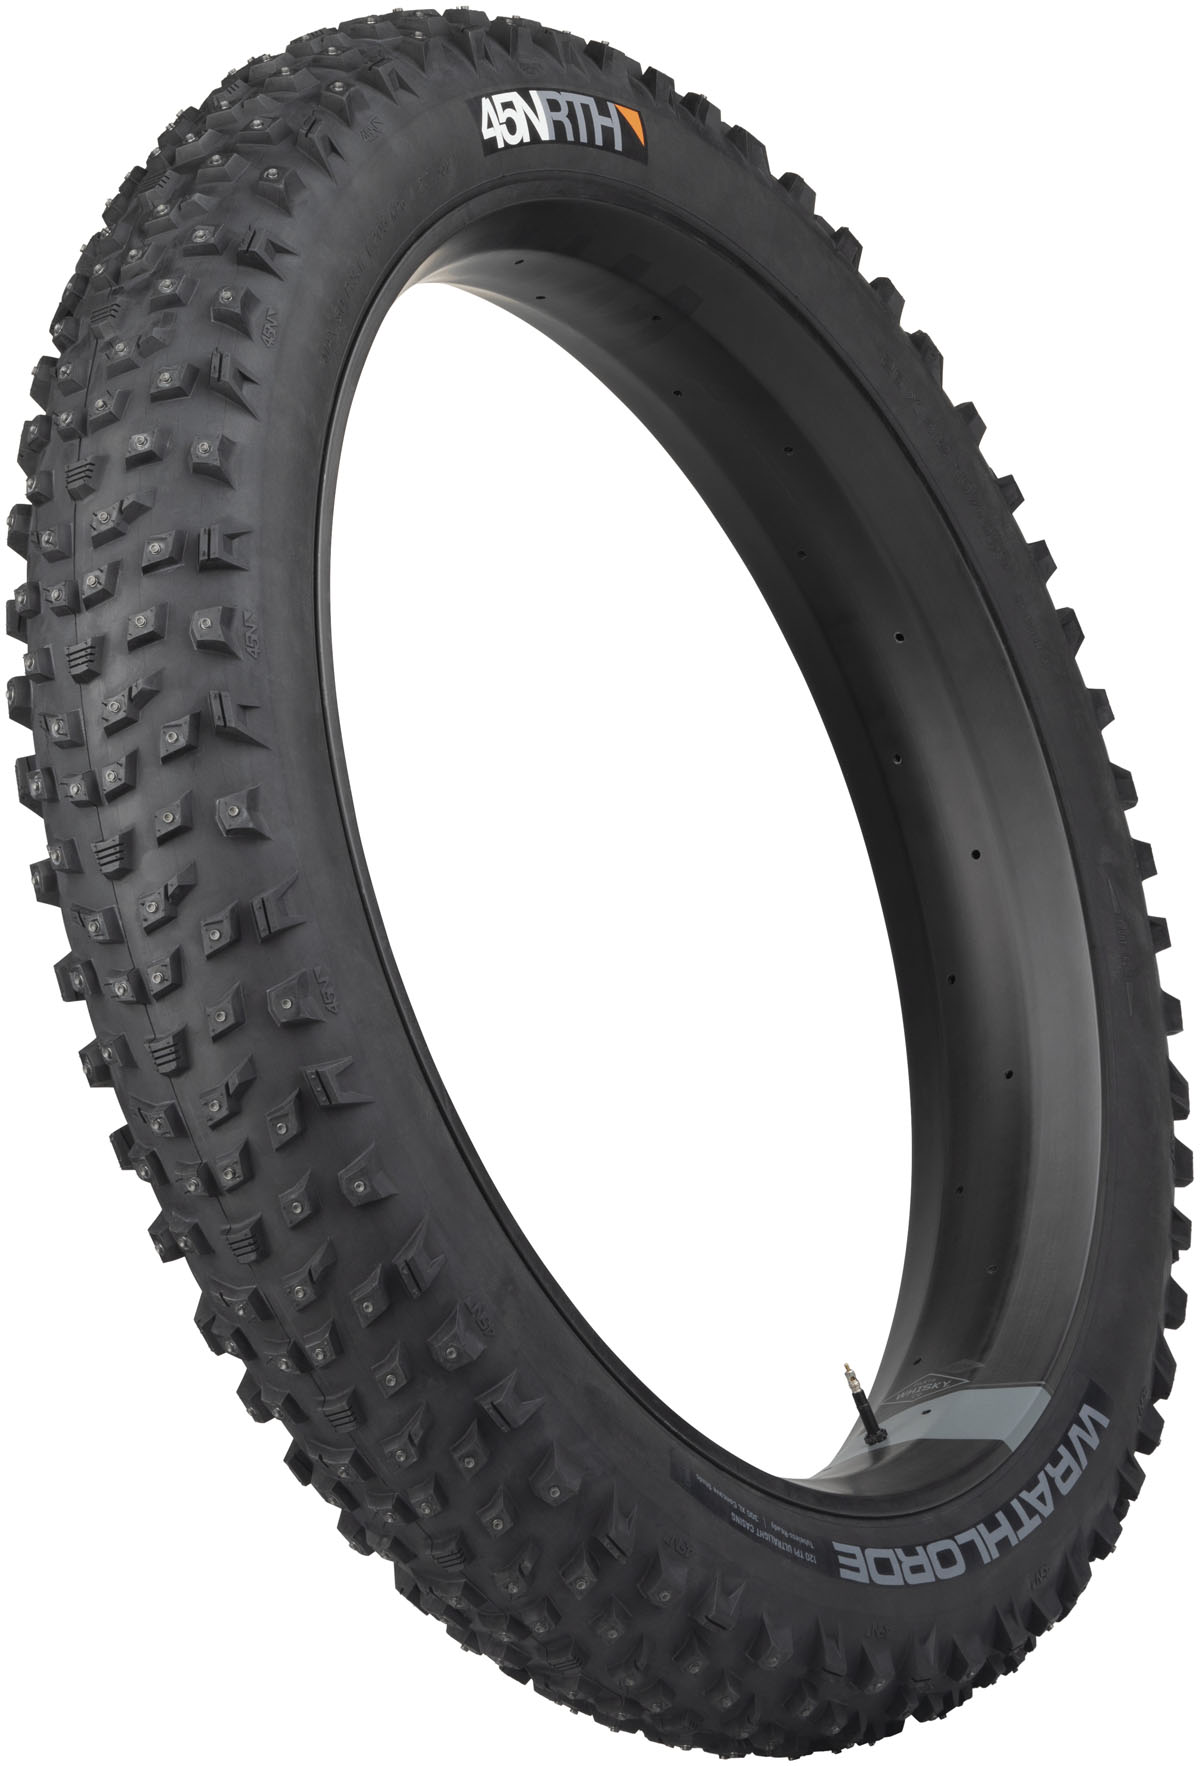 45NRTH unleashes the Wrathlorde studded fat bike tire, Vanhelga adds new tread & tan sidewalls